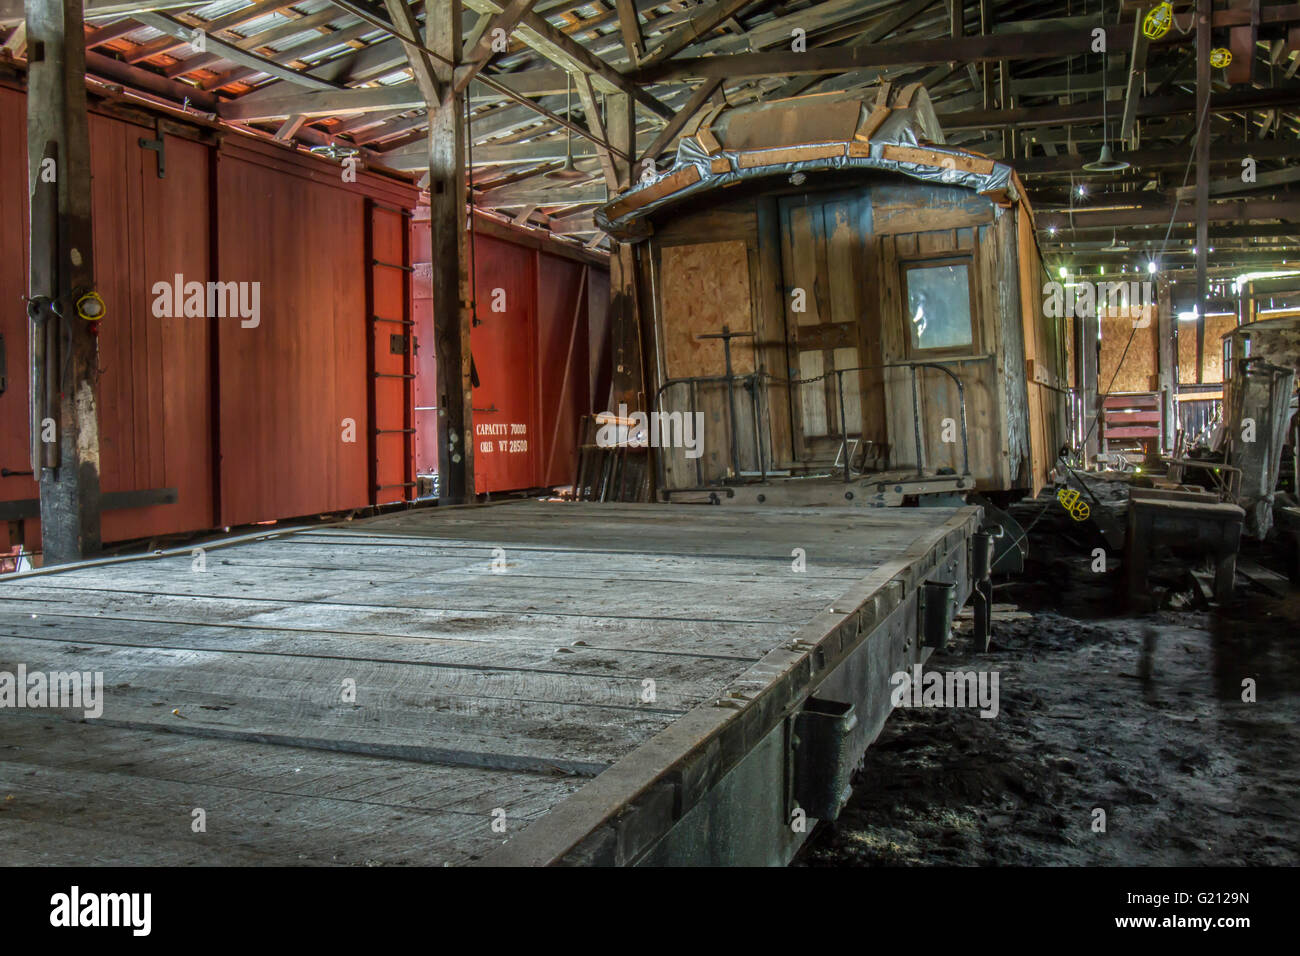 Innenraum der Railroad shed mit Vintage Waggons. Stockfoto